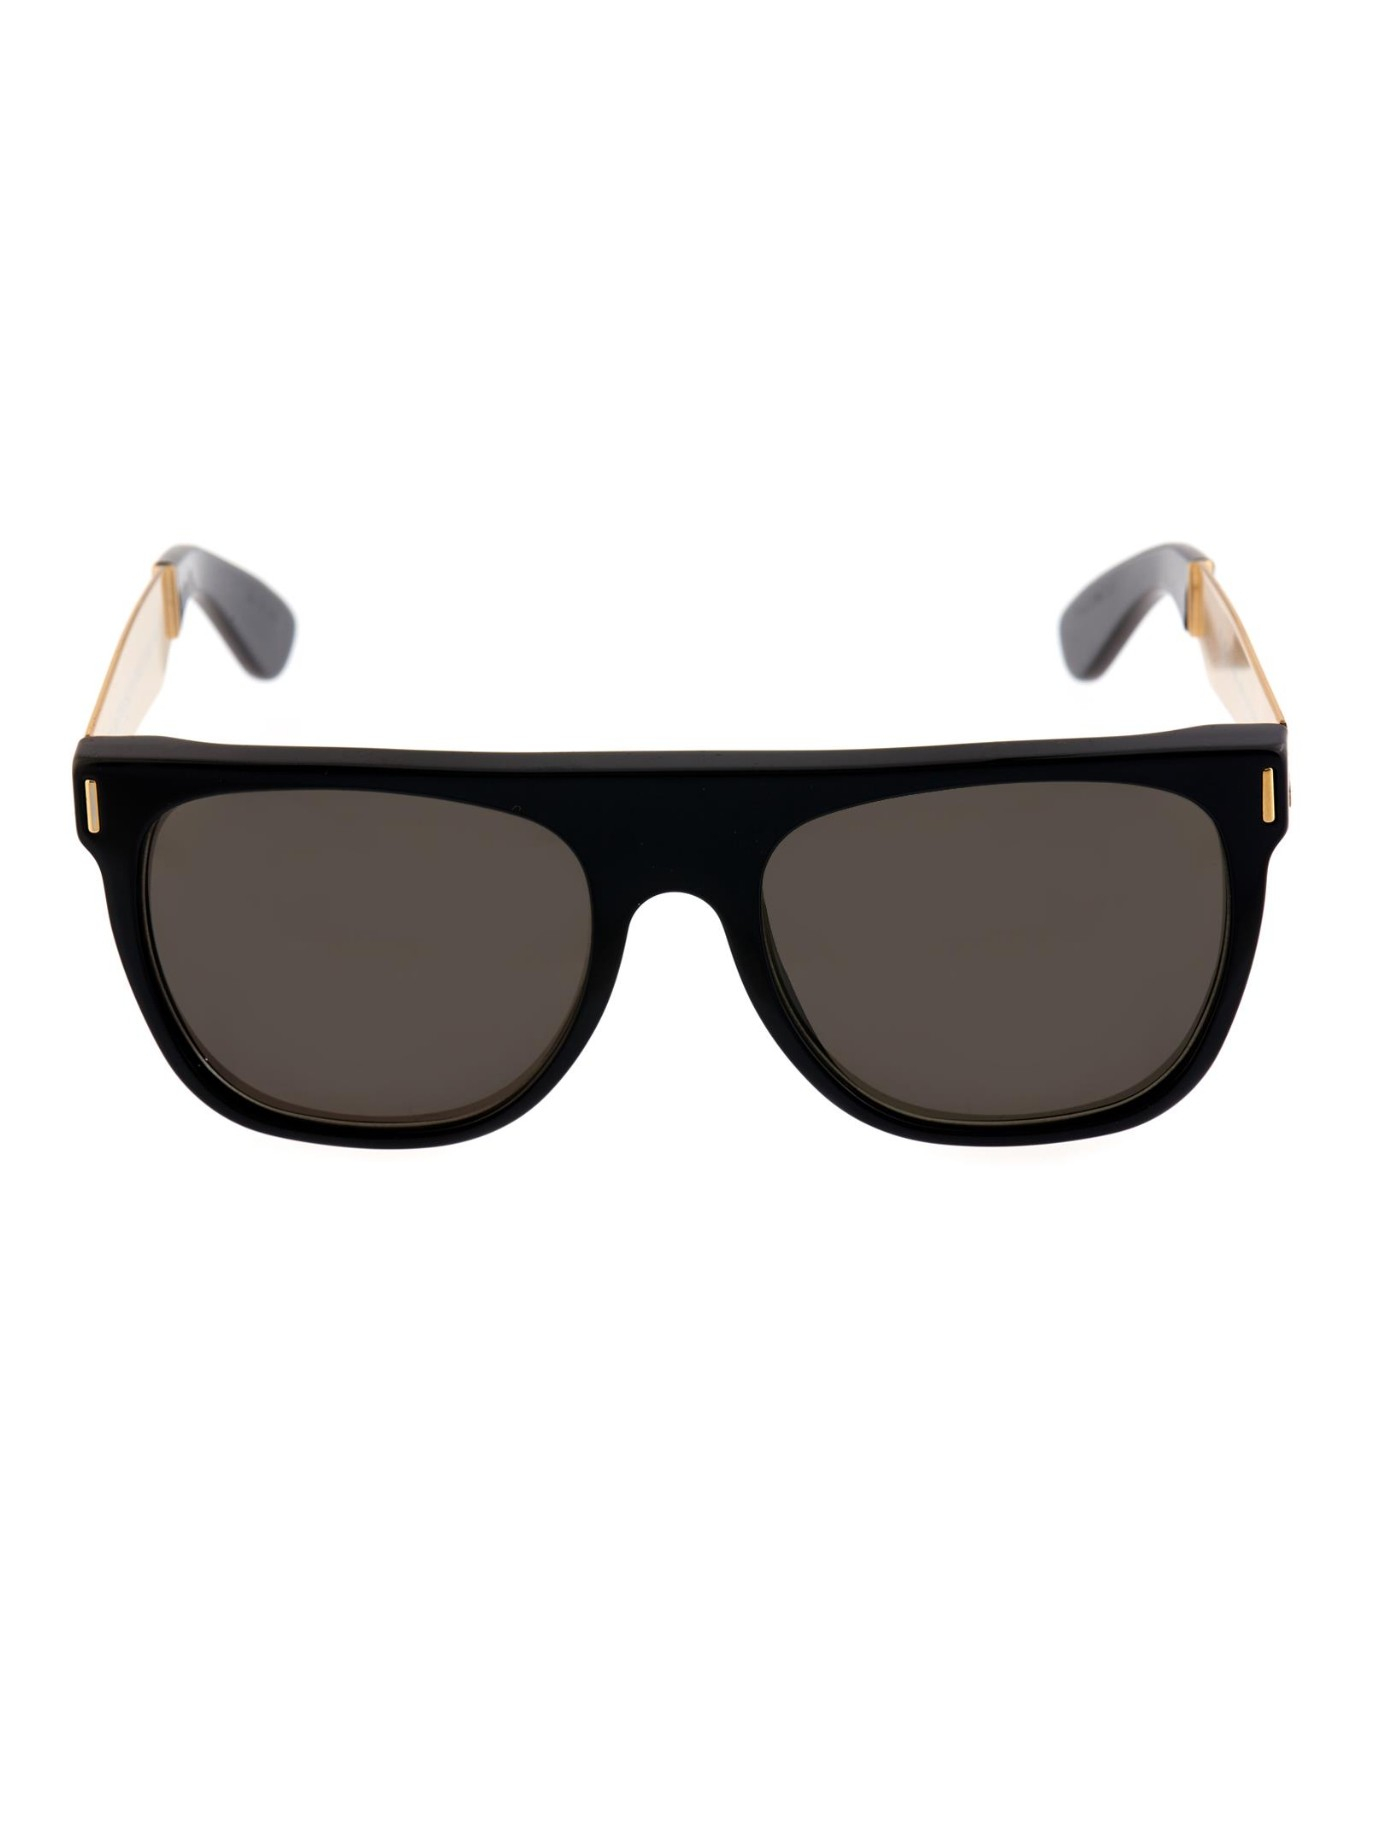 Lyst - Retrosuperfuture Flat Top Francis Sunglasses in Black